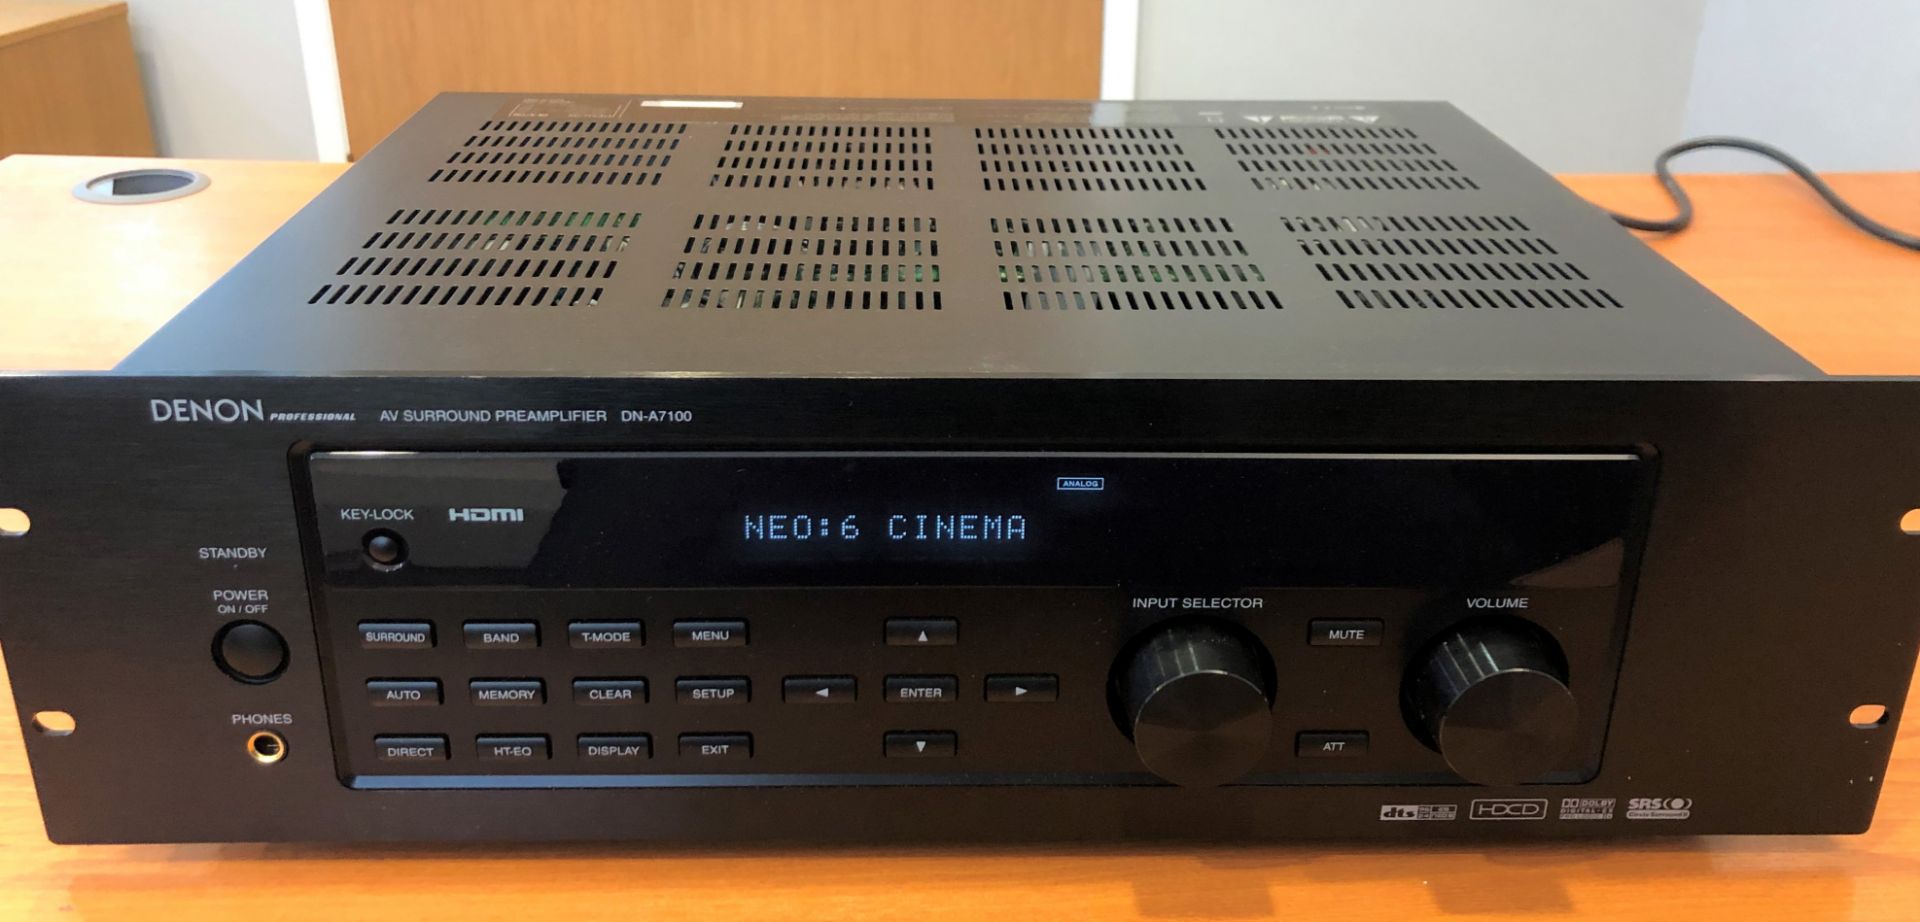 A Denon DN-A7100 Professional AV Surround Pre-Amplifier; very little use, in original box with